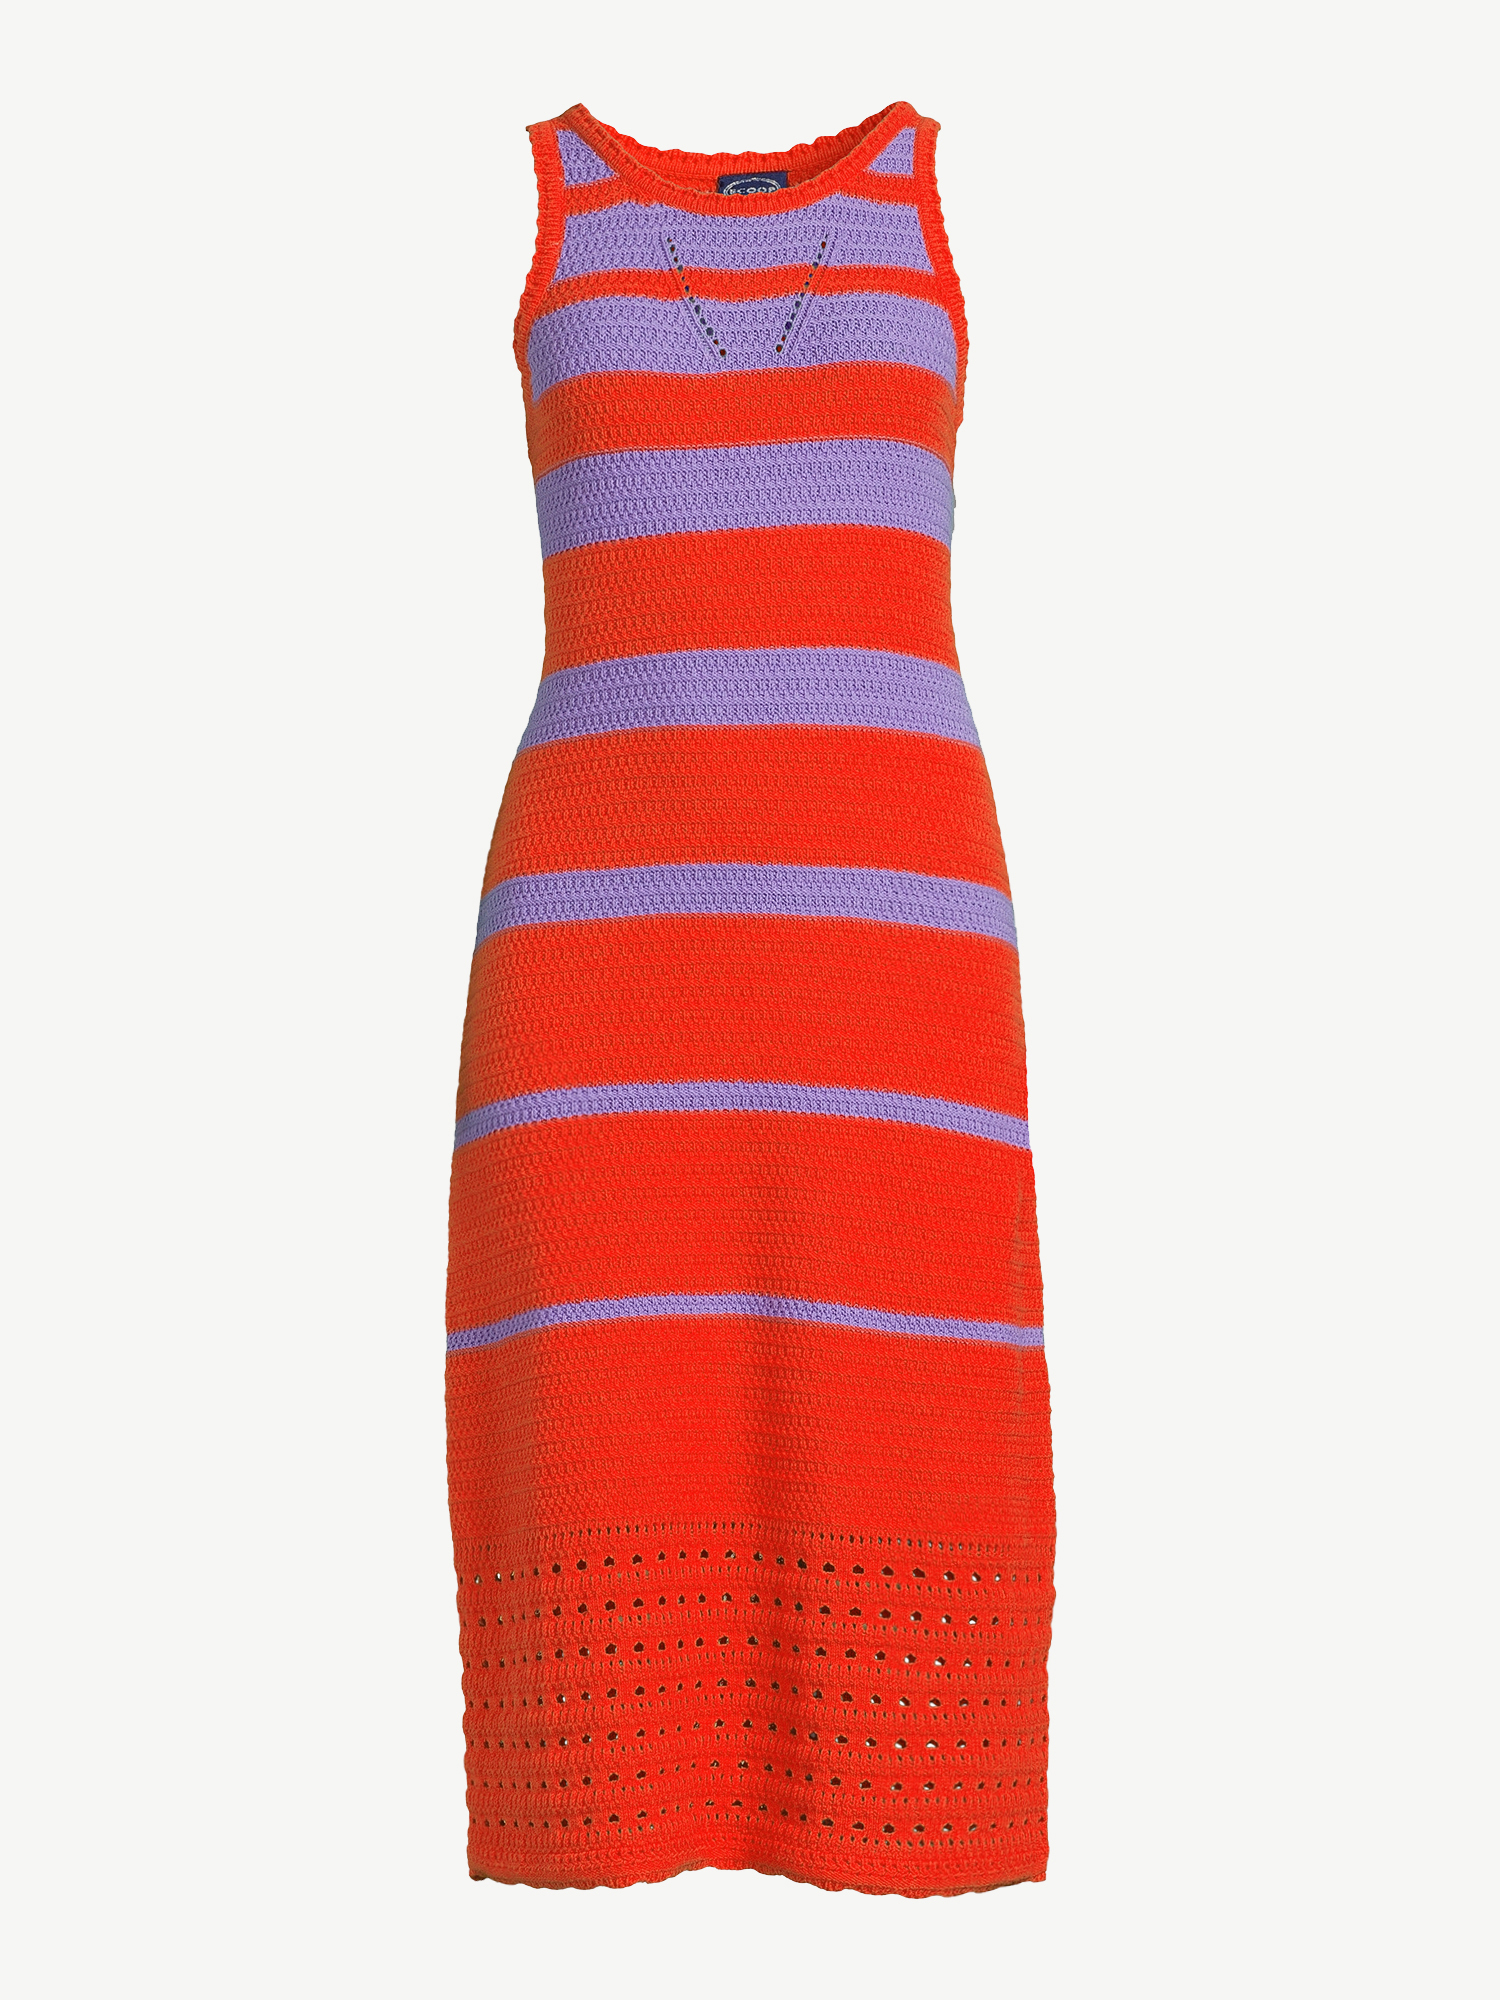 Scoop Women’s Striped Crochet Dress, Mid-Calf Length - image 2 of 4